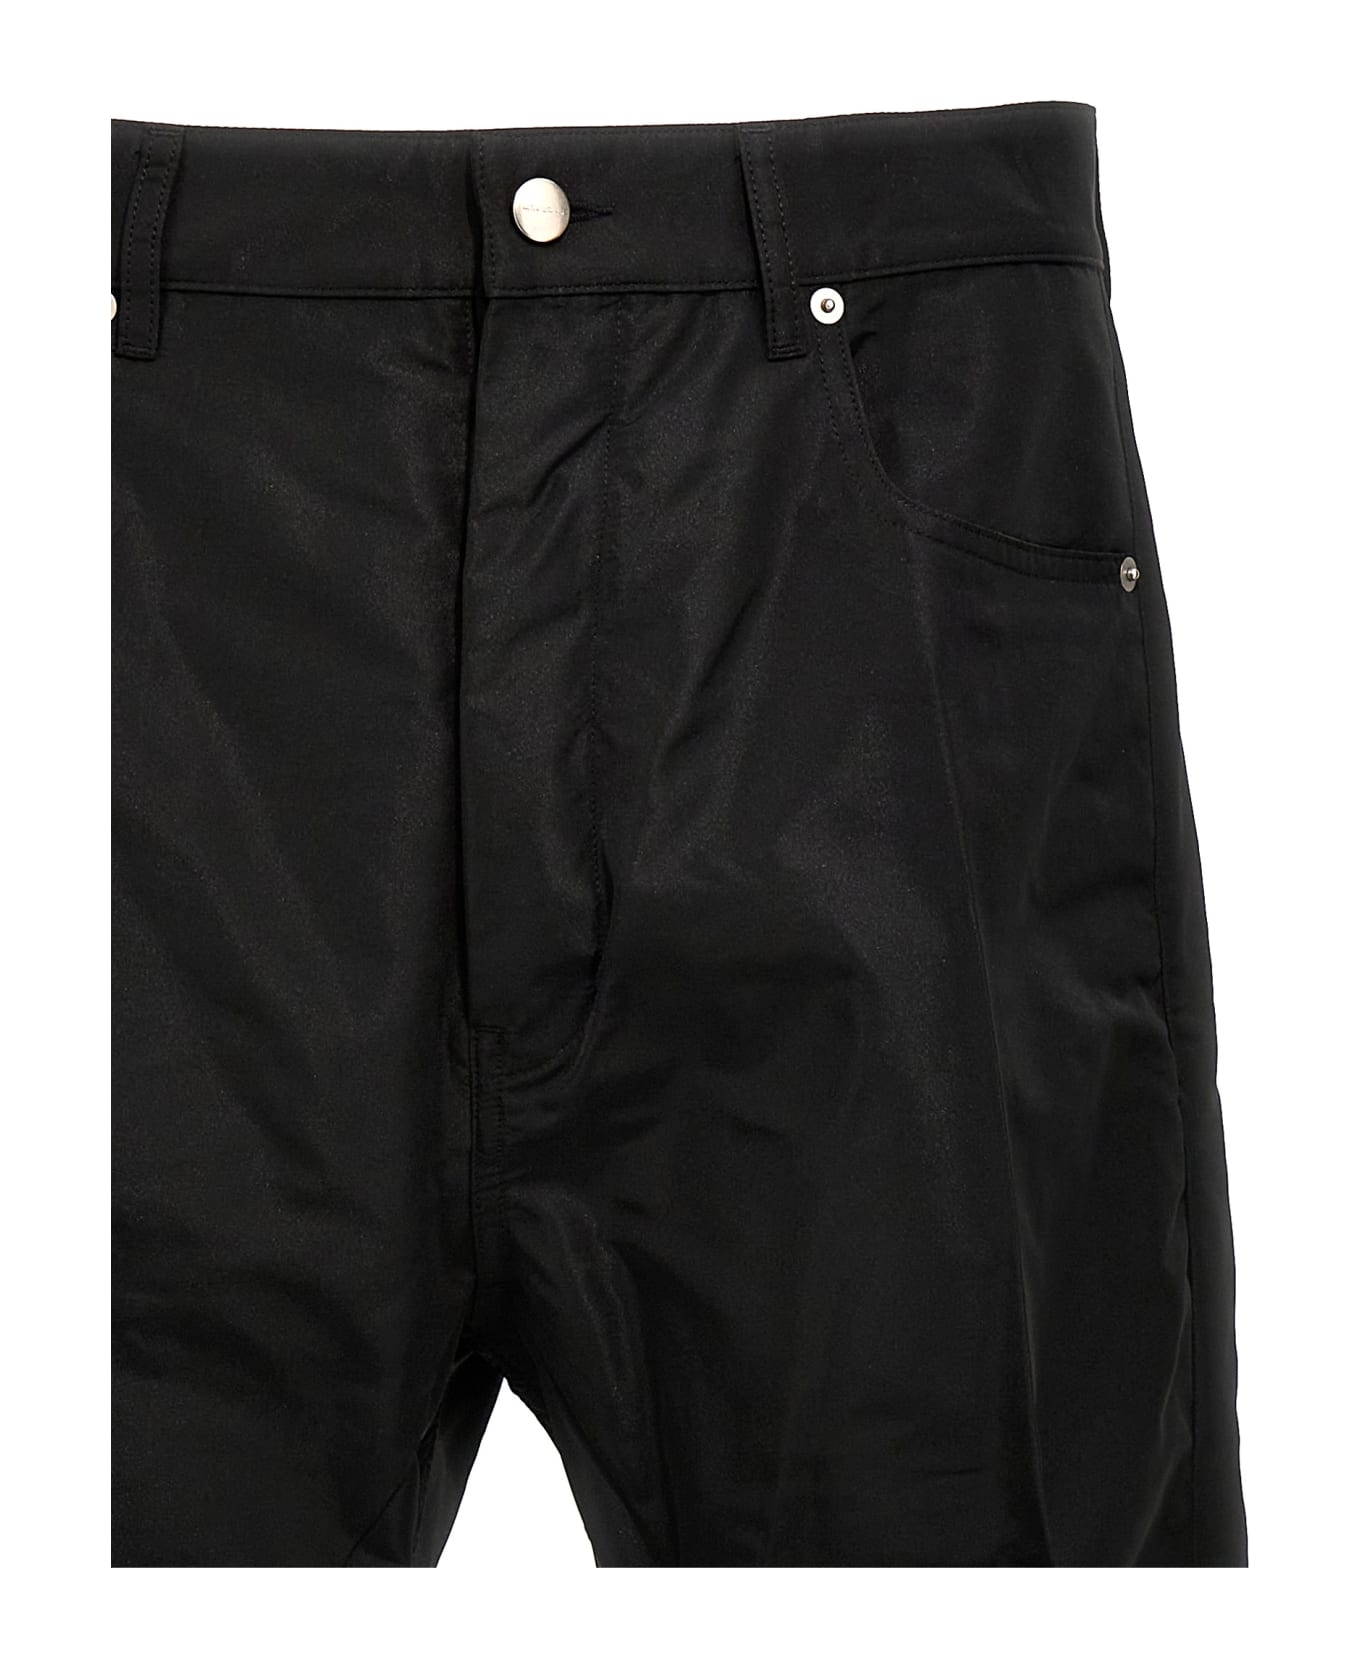 Rick Owens 'geth Jeans' Pants - Black   ボトムス